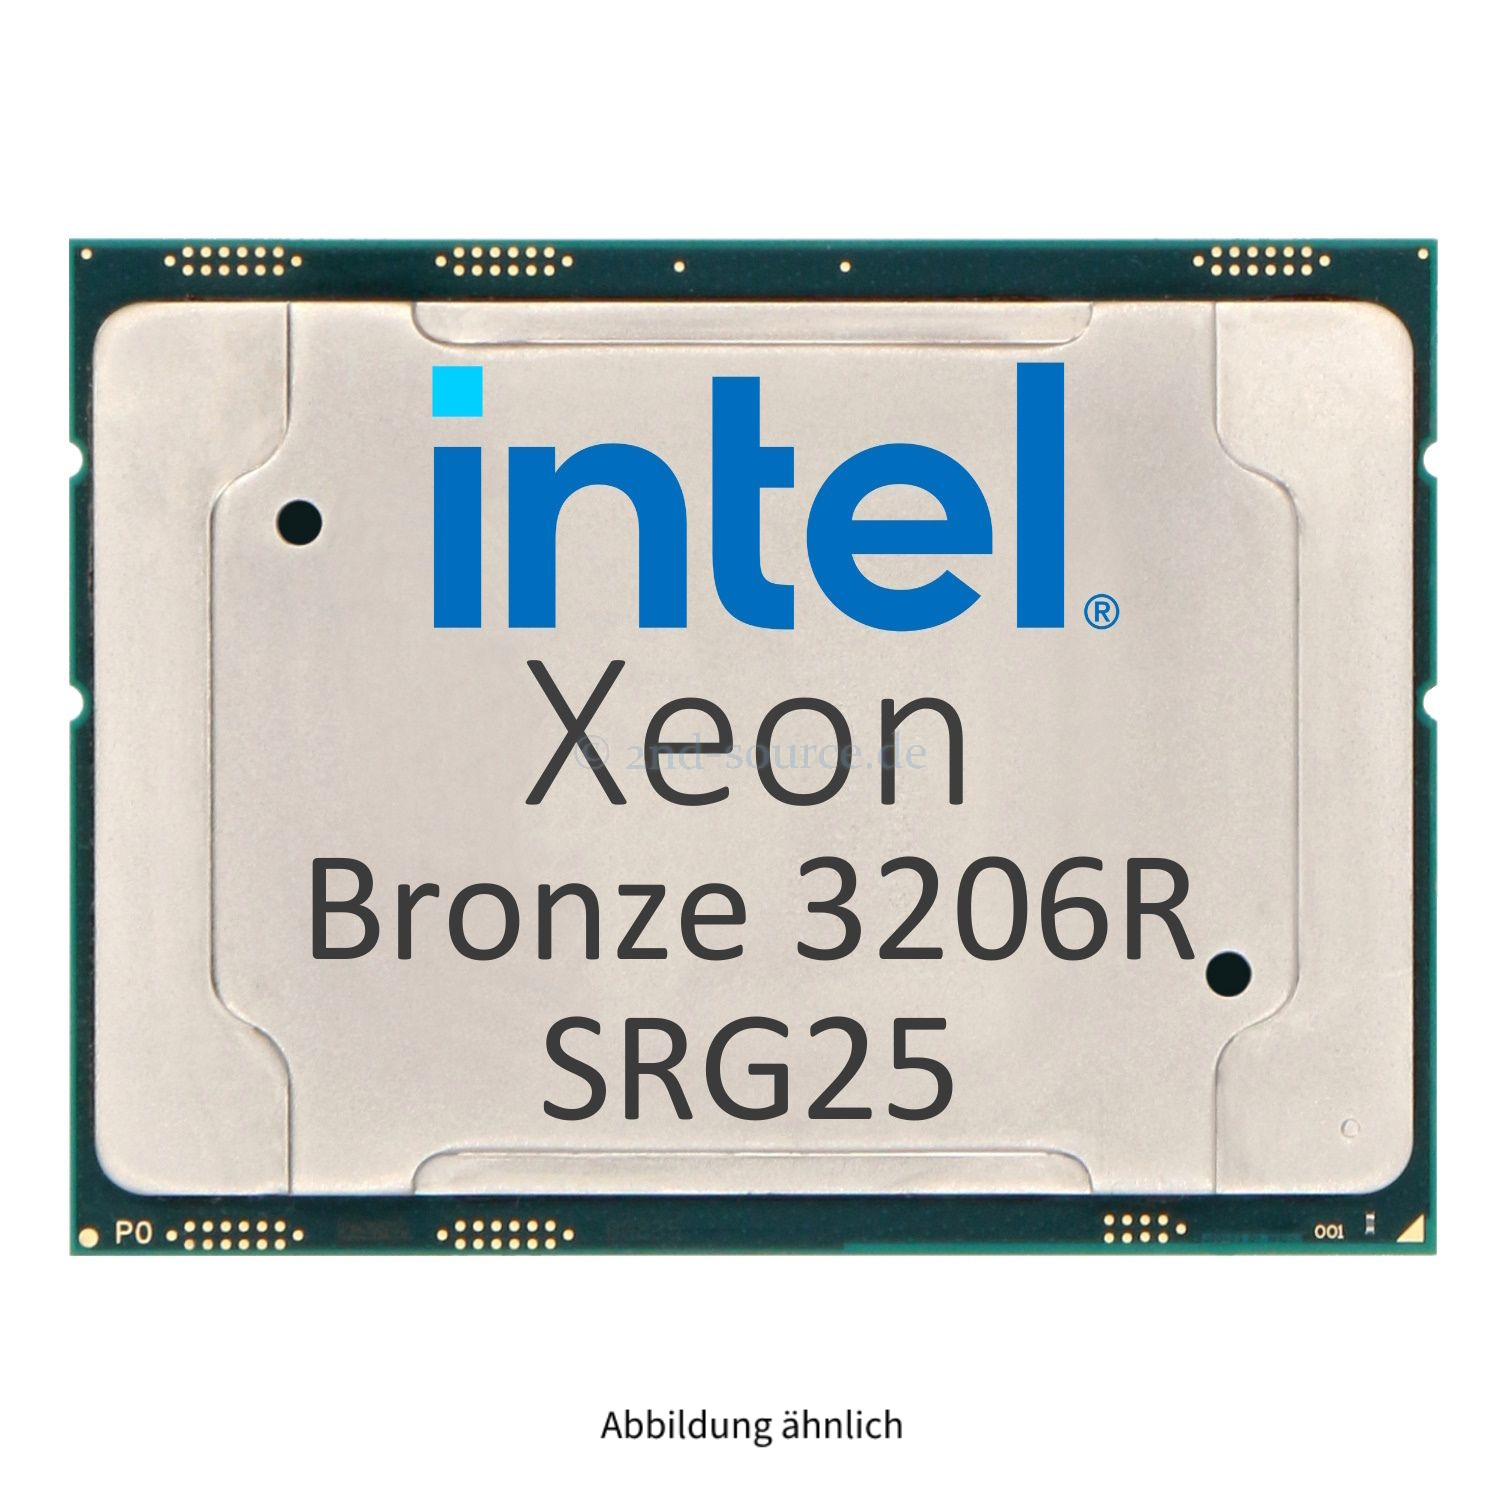 Intel Xeon Bronze 3206R 1.90GHz 11MB 8-Core CPU 85W SRG25 CD8069504344600